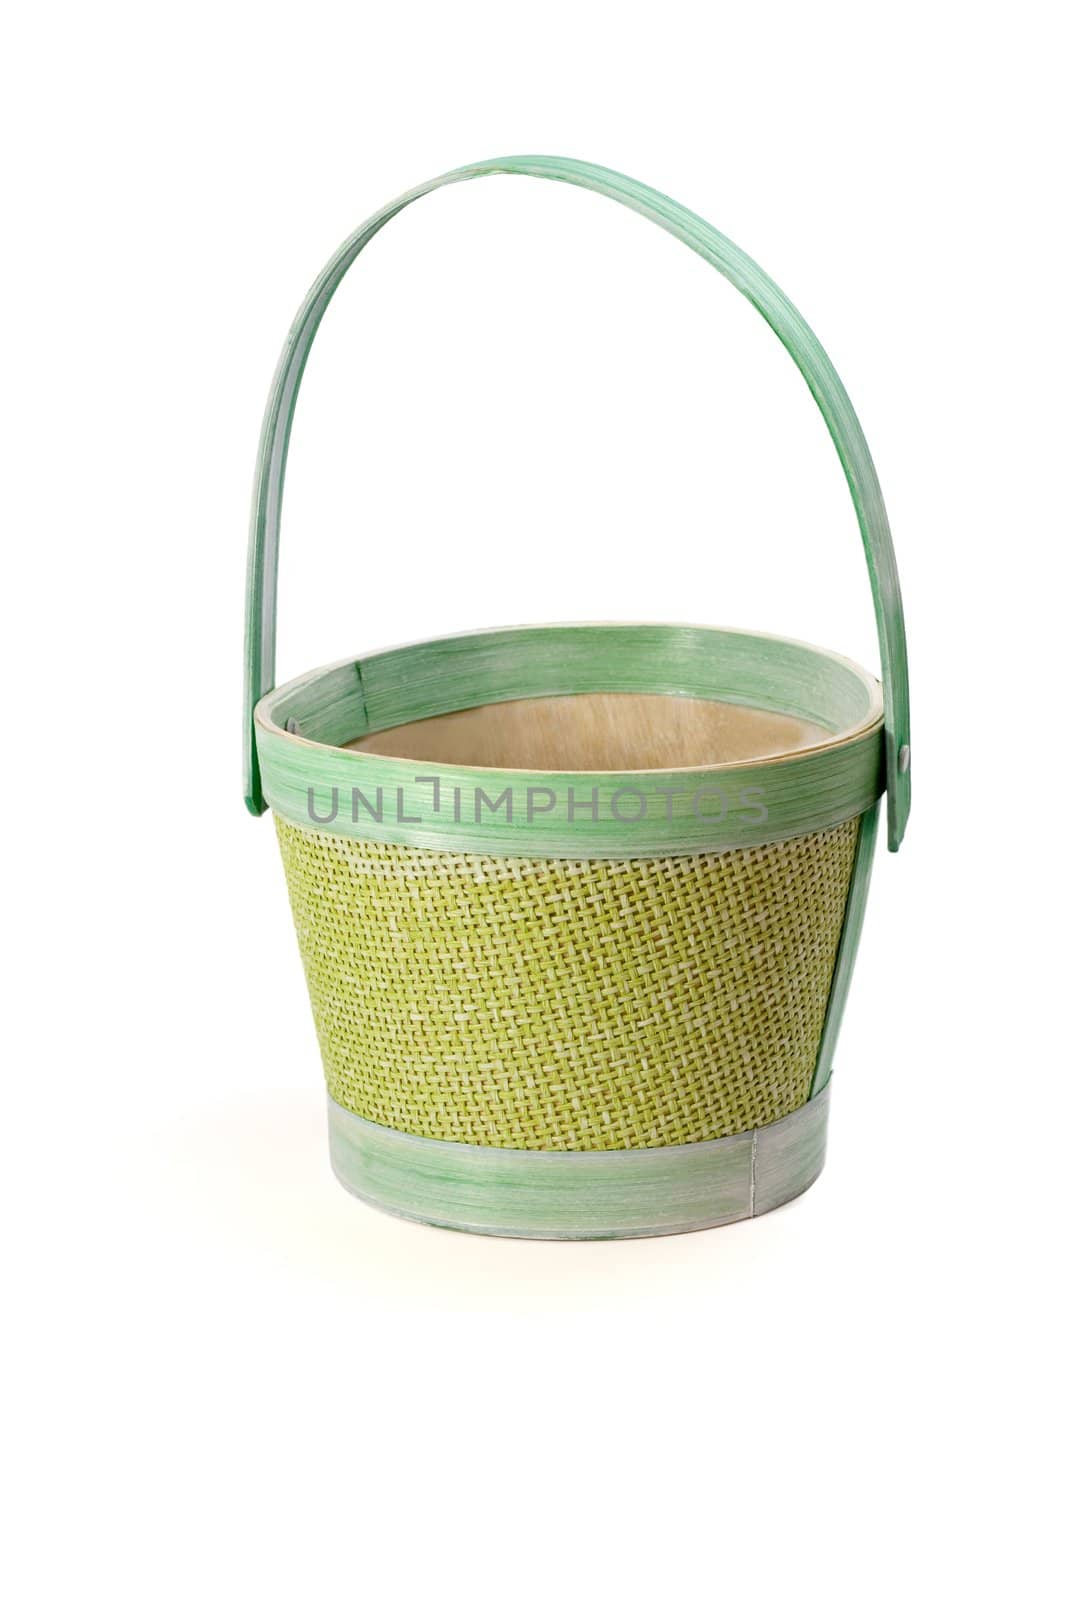 Empty green wicker basket on white background